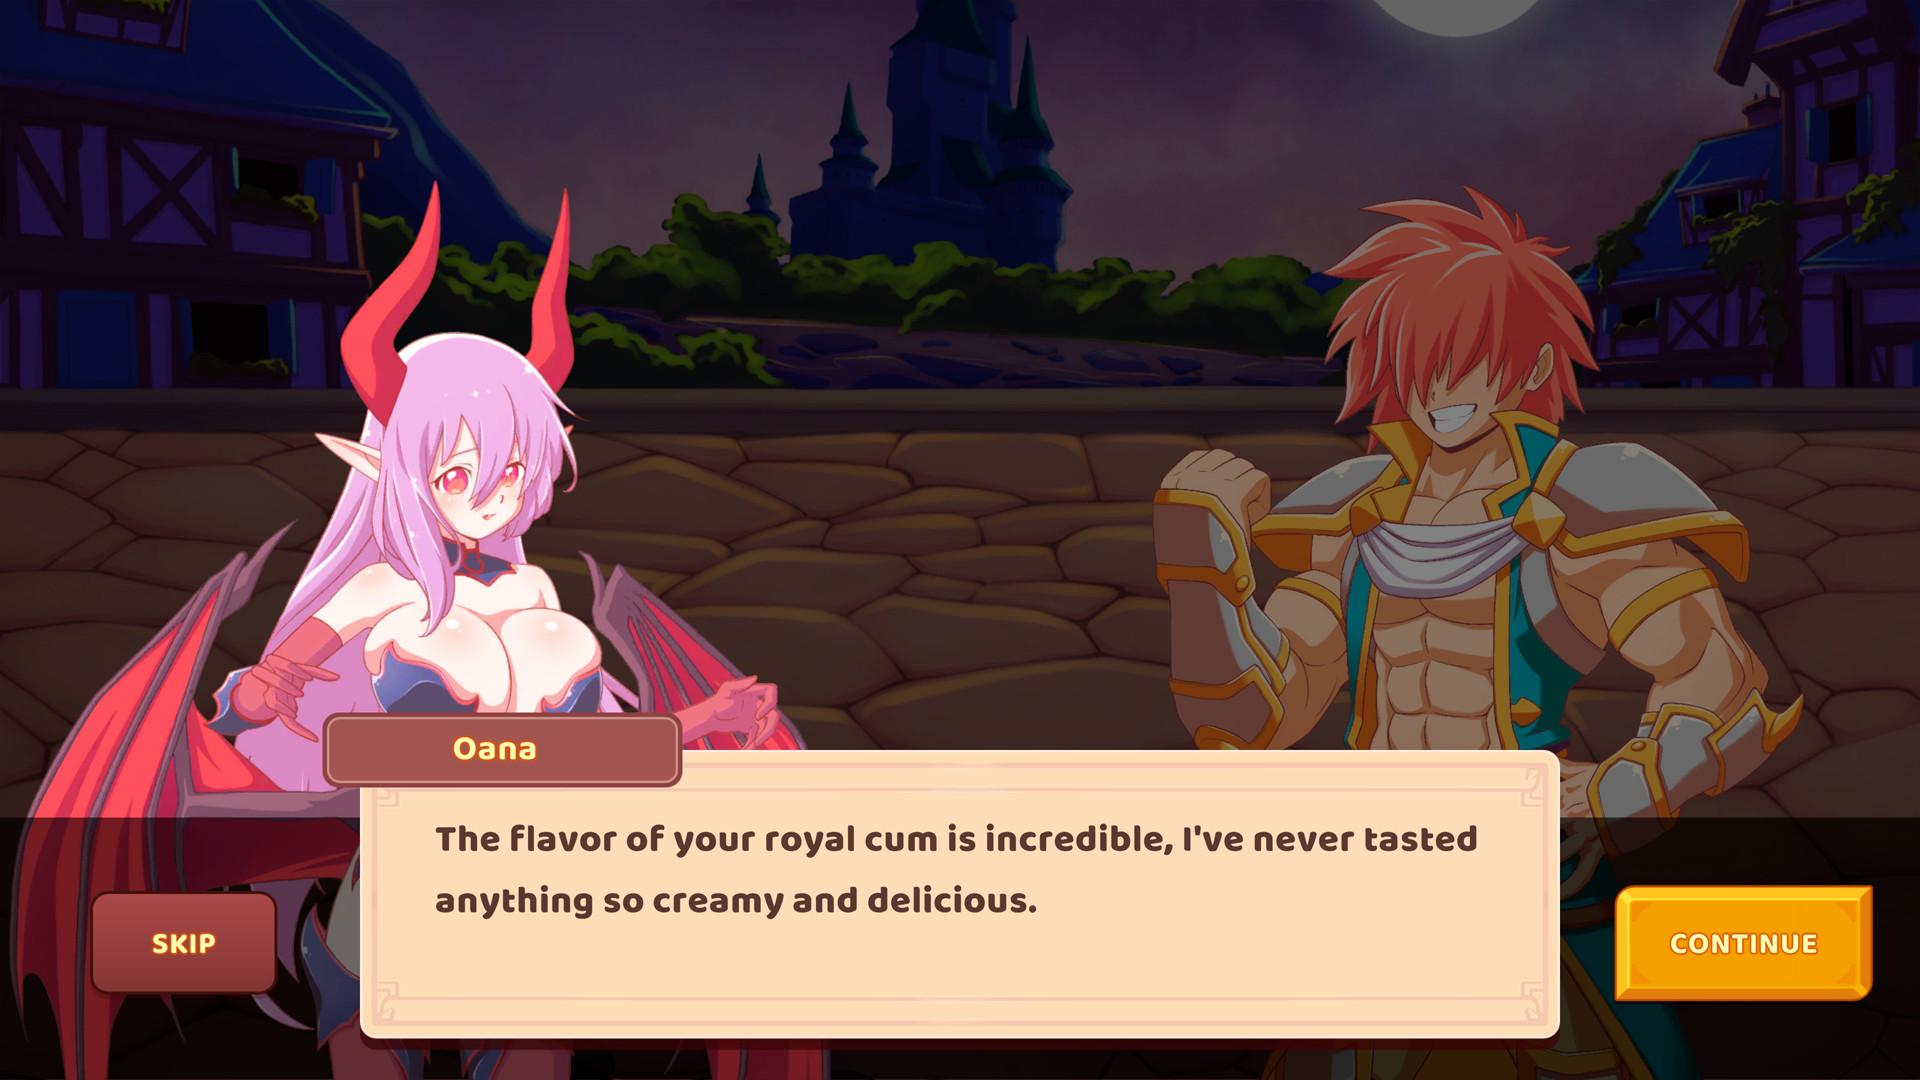 Screenshot №12 from game Eros Fantasy